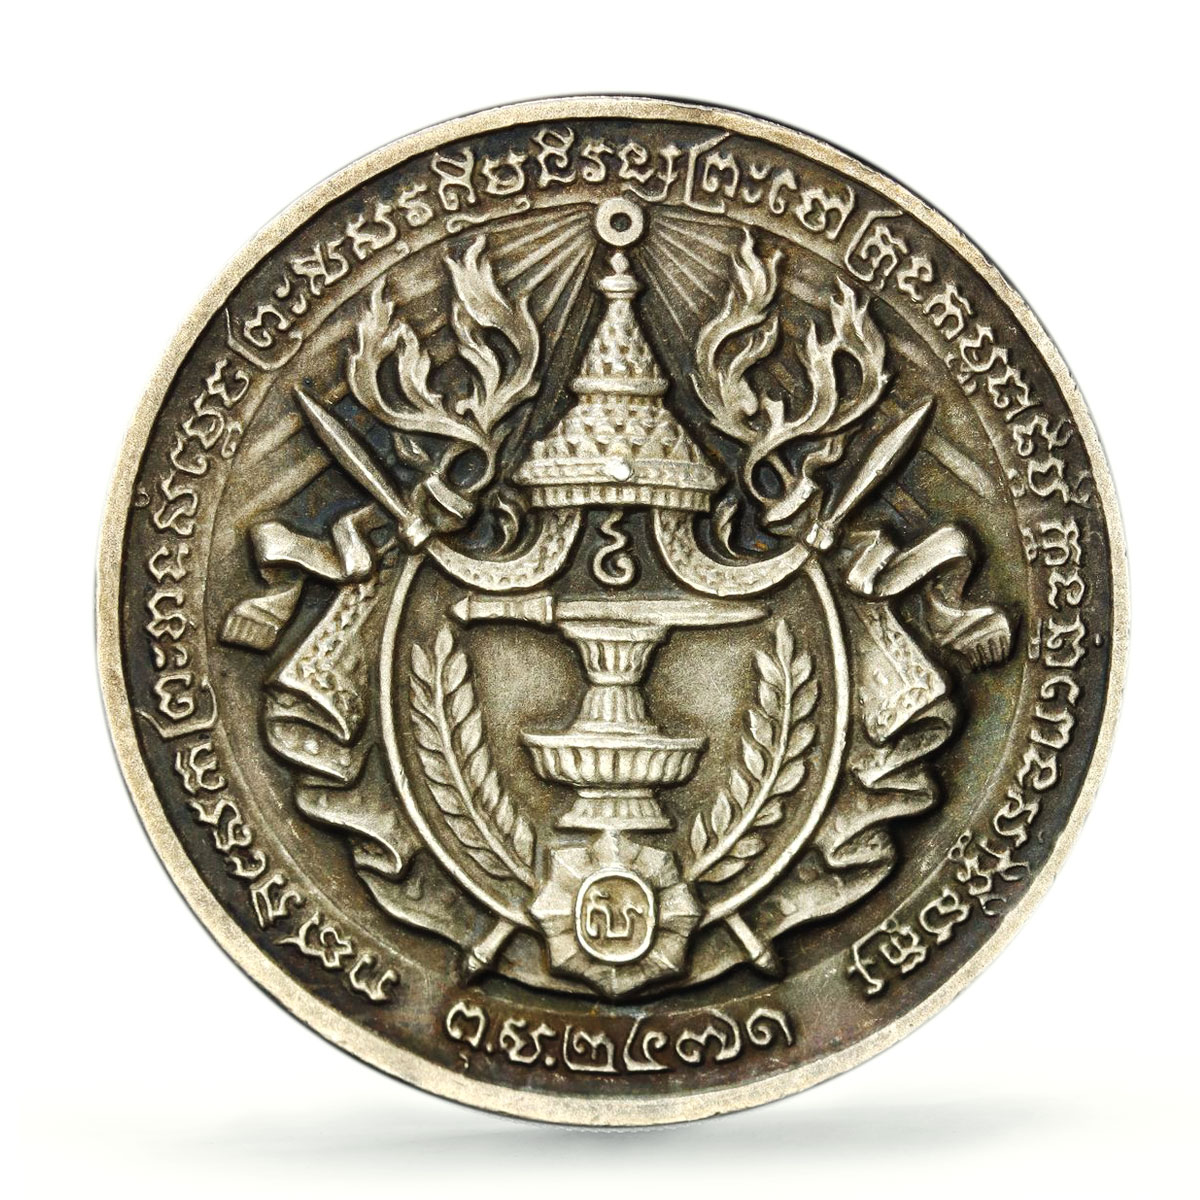 Cambodia Sisowath II Coronation Politics Lec-146 SP58 PCGS silver medal 1928